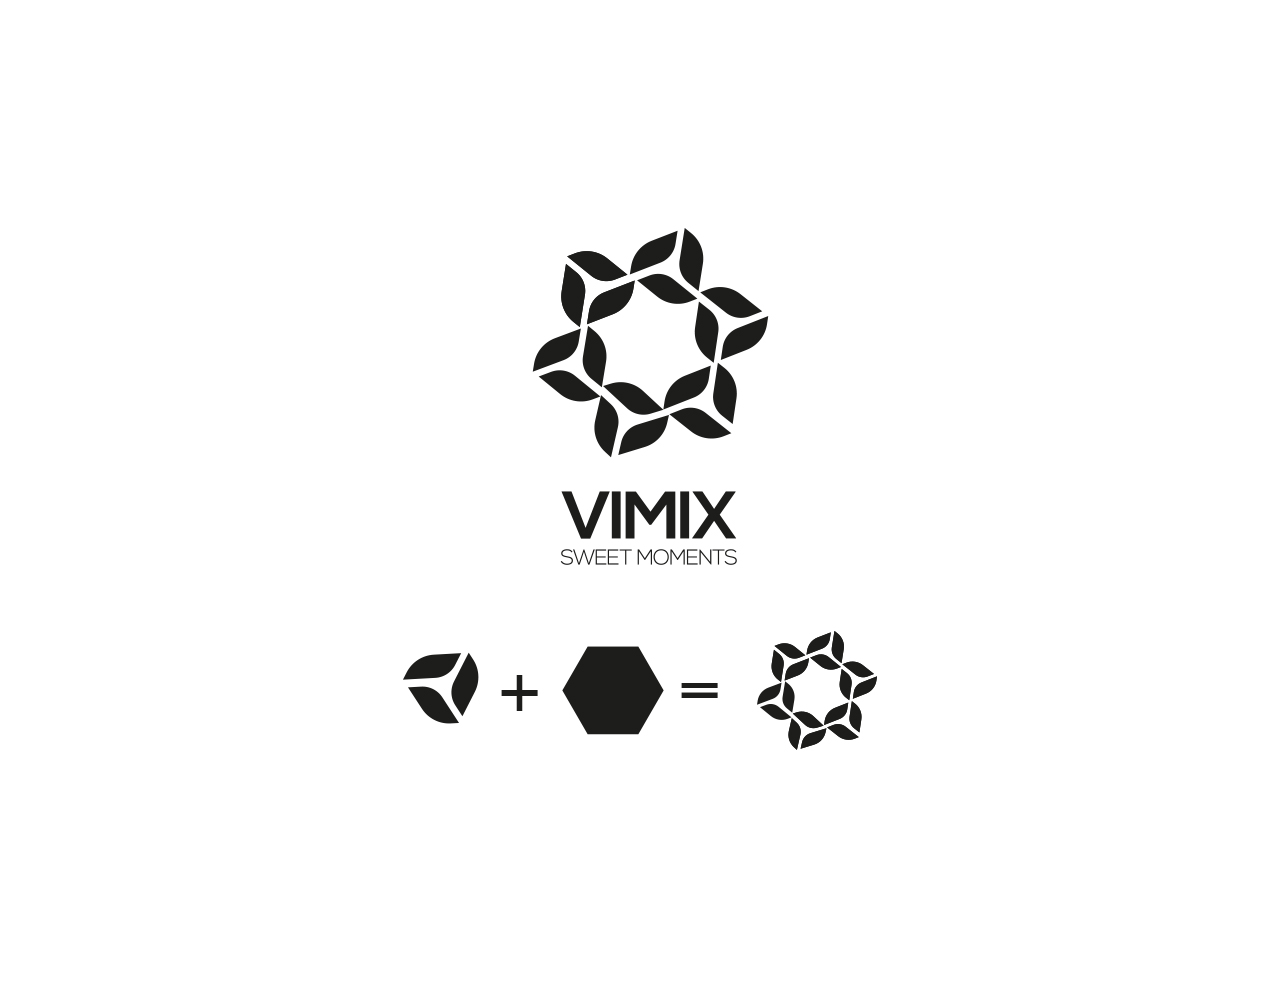 Work view – Vimix 2